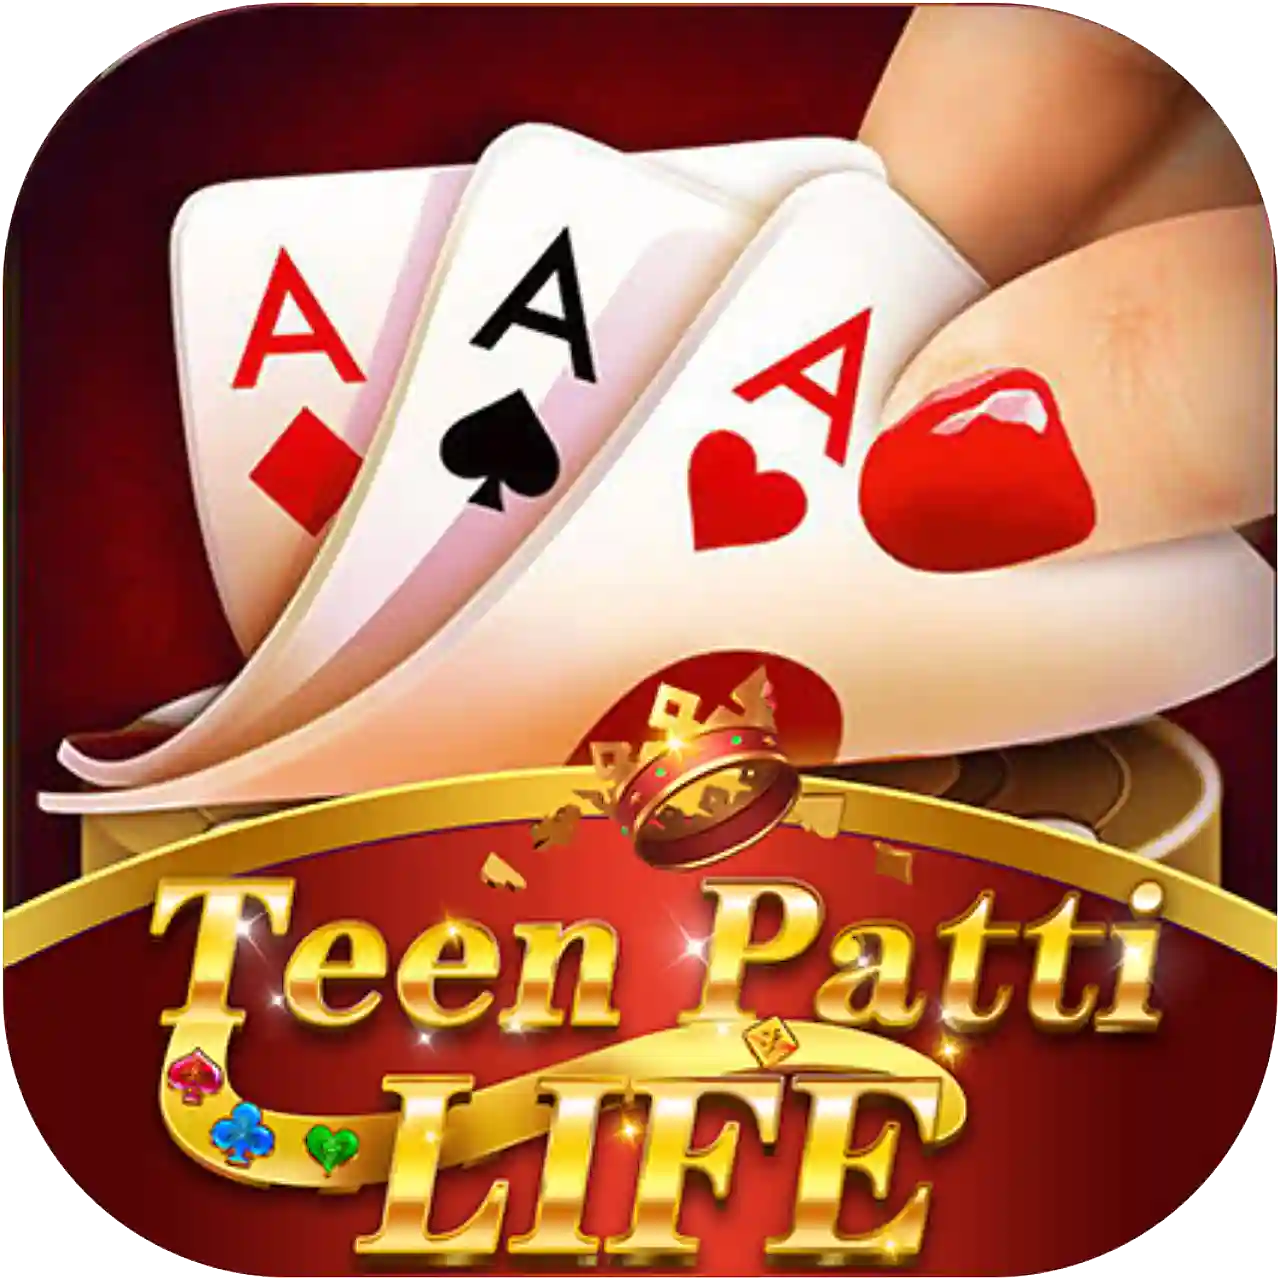 Teen Patti Life - Teen Patti Yes Apk